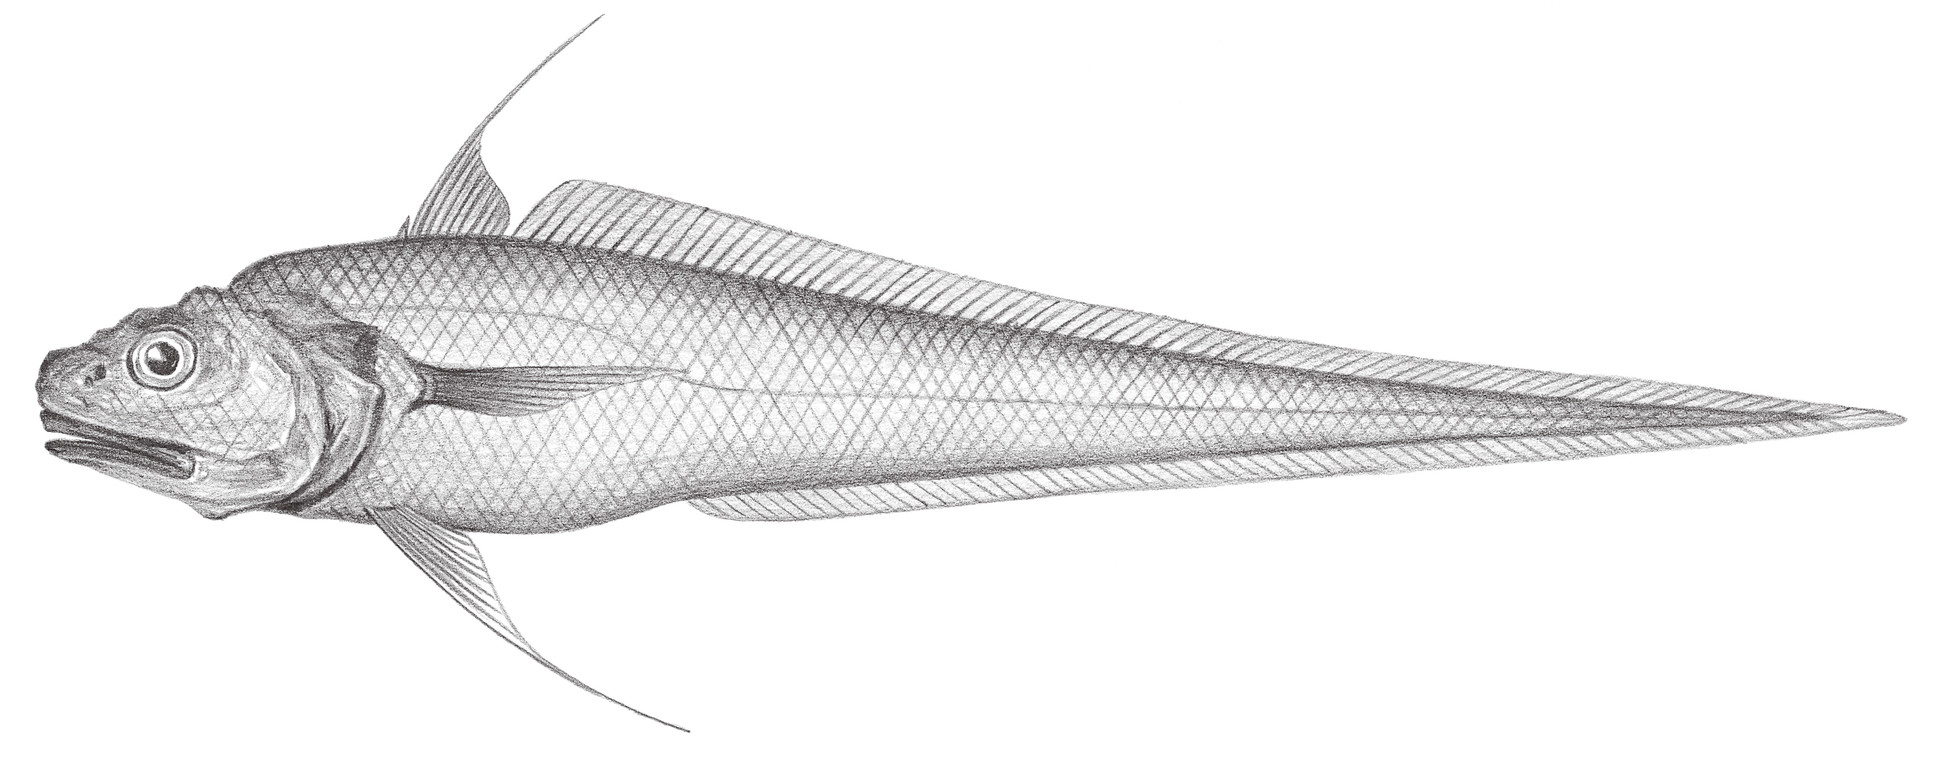 548.	寬頭底尾鱈 Bathygadus antrodes (Jordan & Gilbert, 1904)